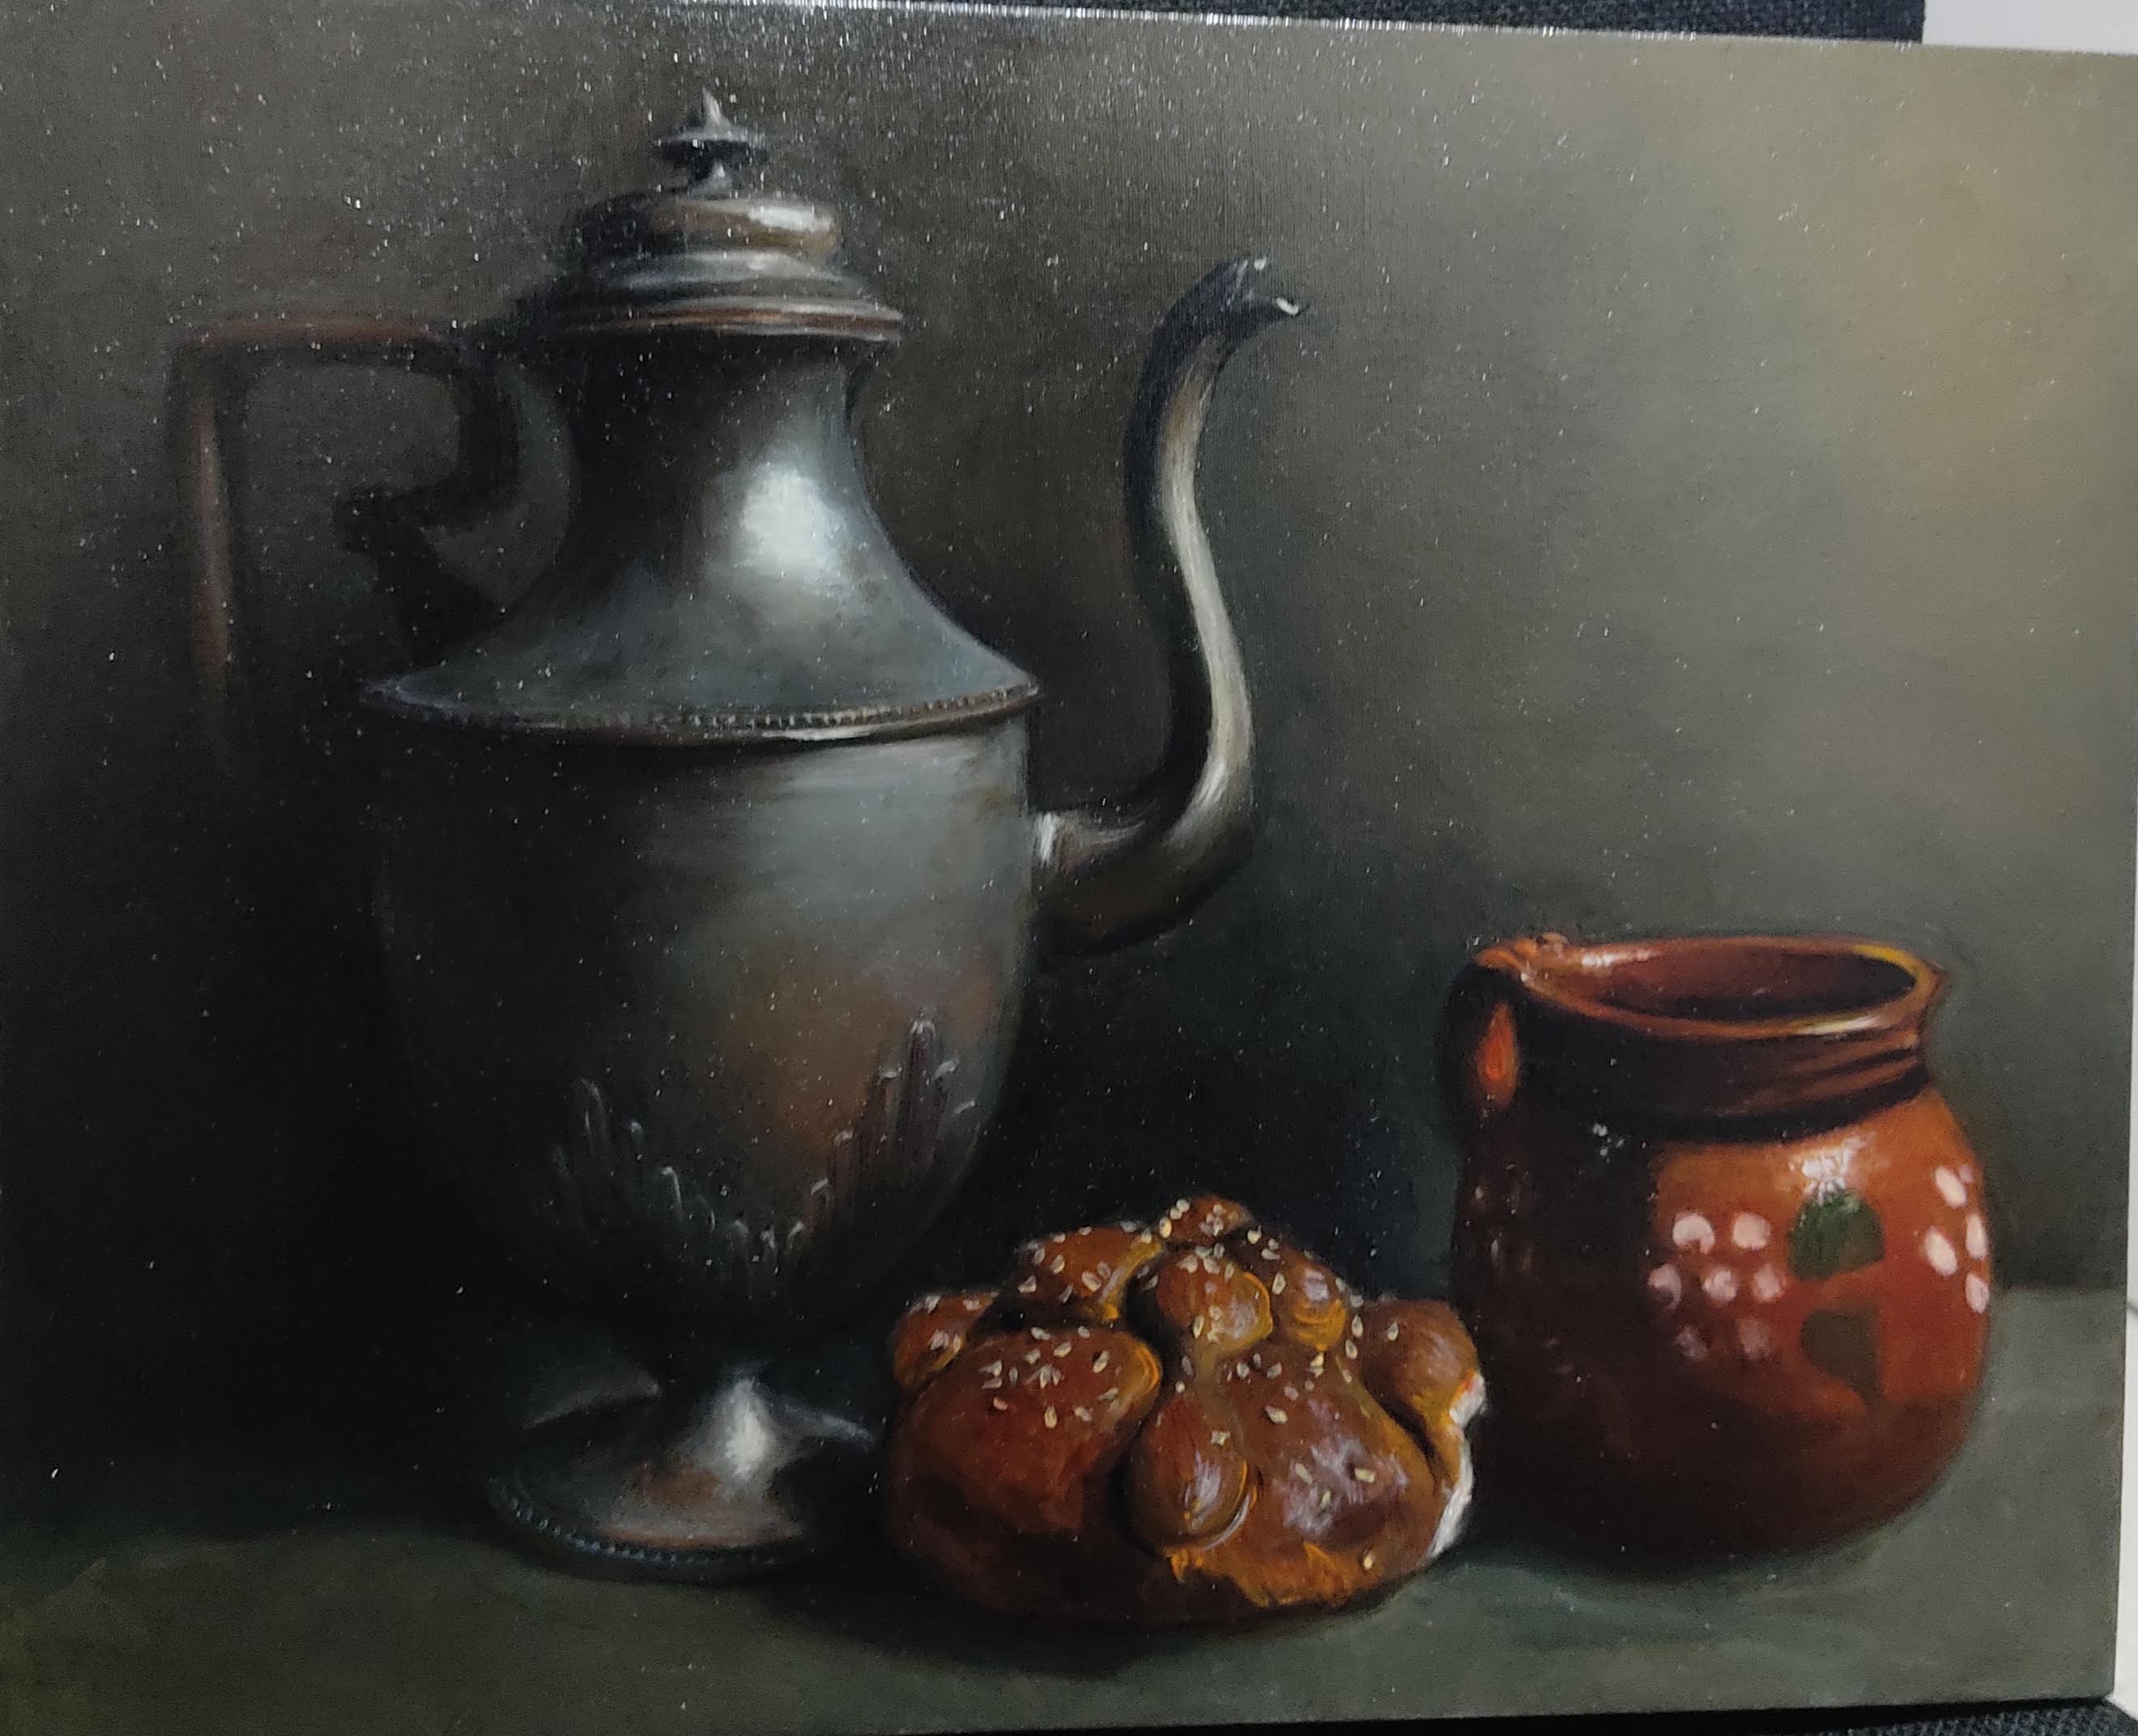 Título: (Bodegón) Jarrita, tetera y Pan
Medidas: 28 x 35 cm
Técnica: óleo sobre tela sobre tabla
Autora: Itzeel Reyes